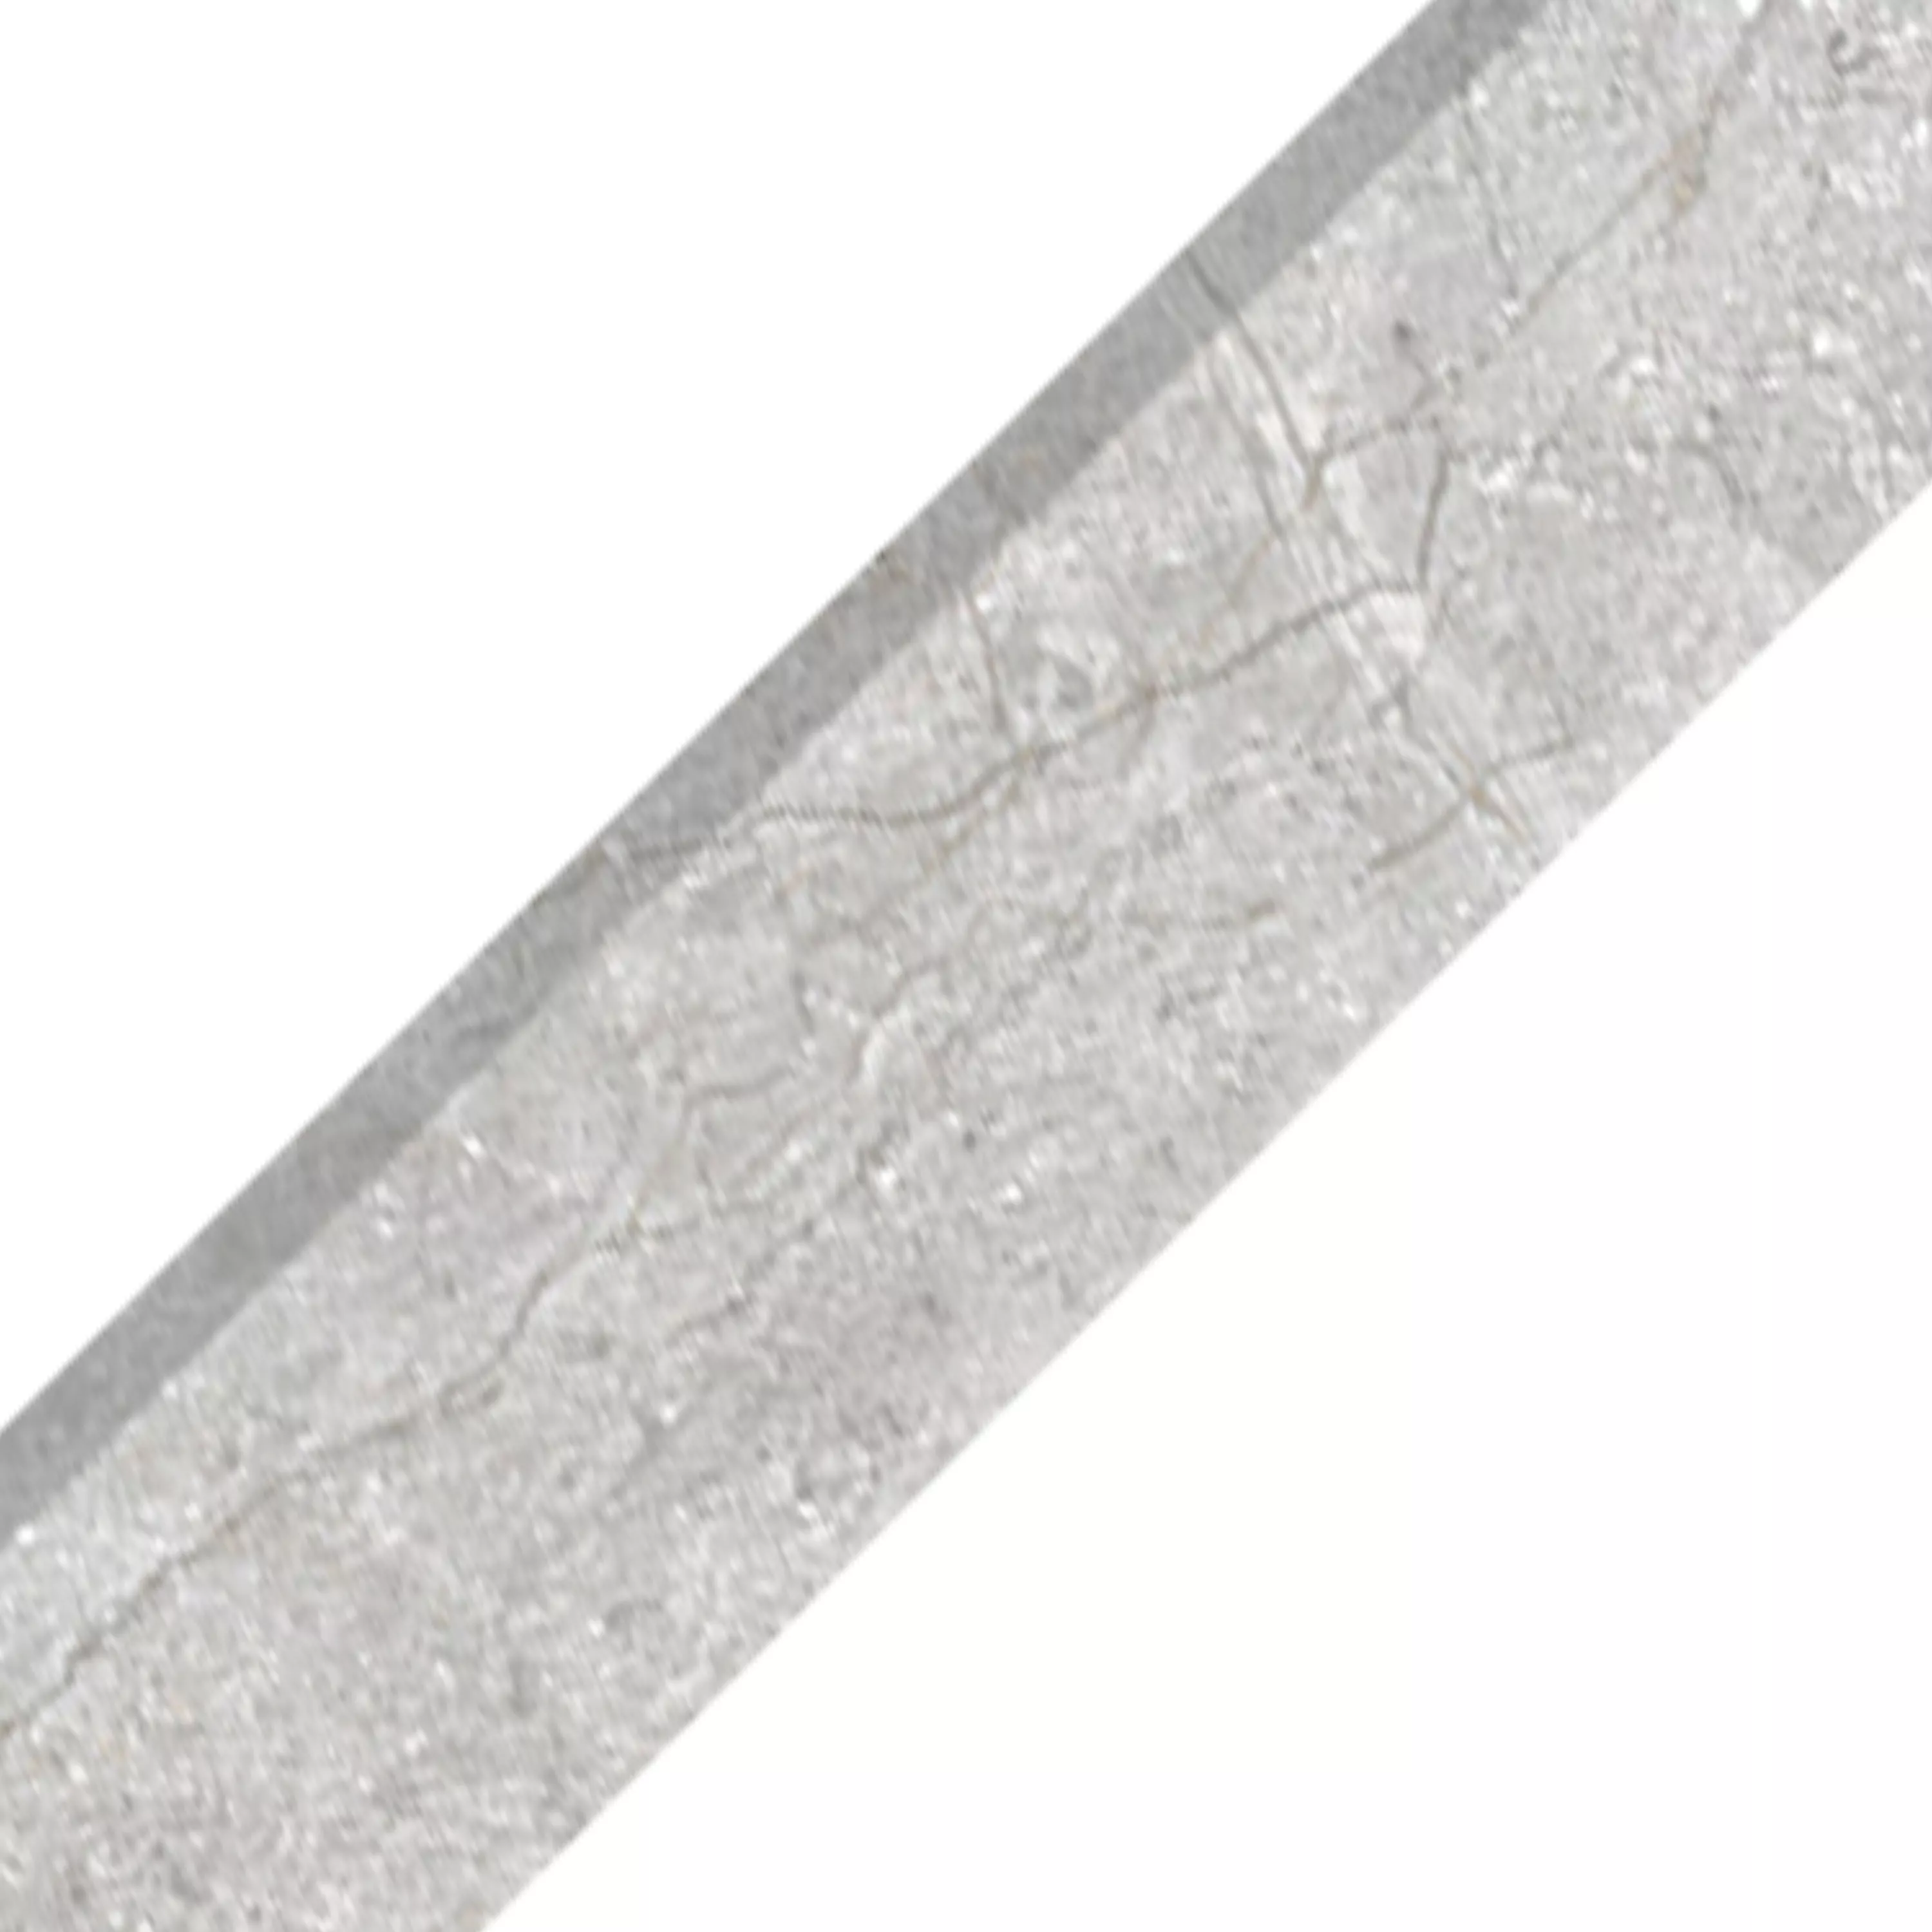 Bodenfliesen Pangea Marmoroptik Matt Silber Sockel 7x60cm